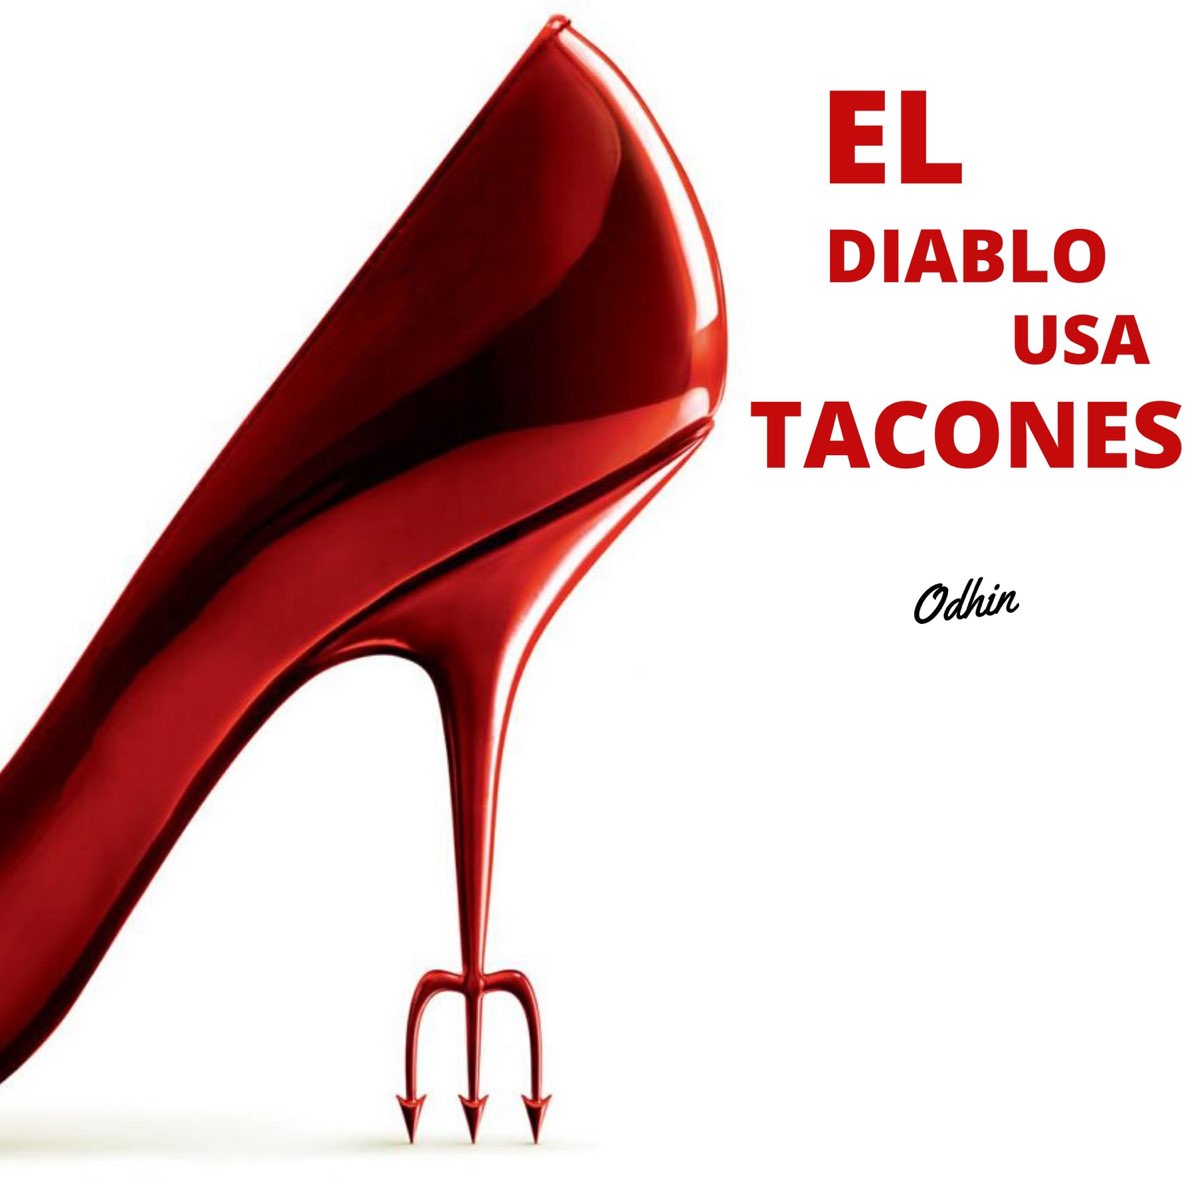 El Diablo Usa Tacones - Single by Odhin on Apple Music